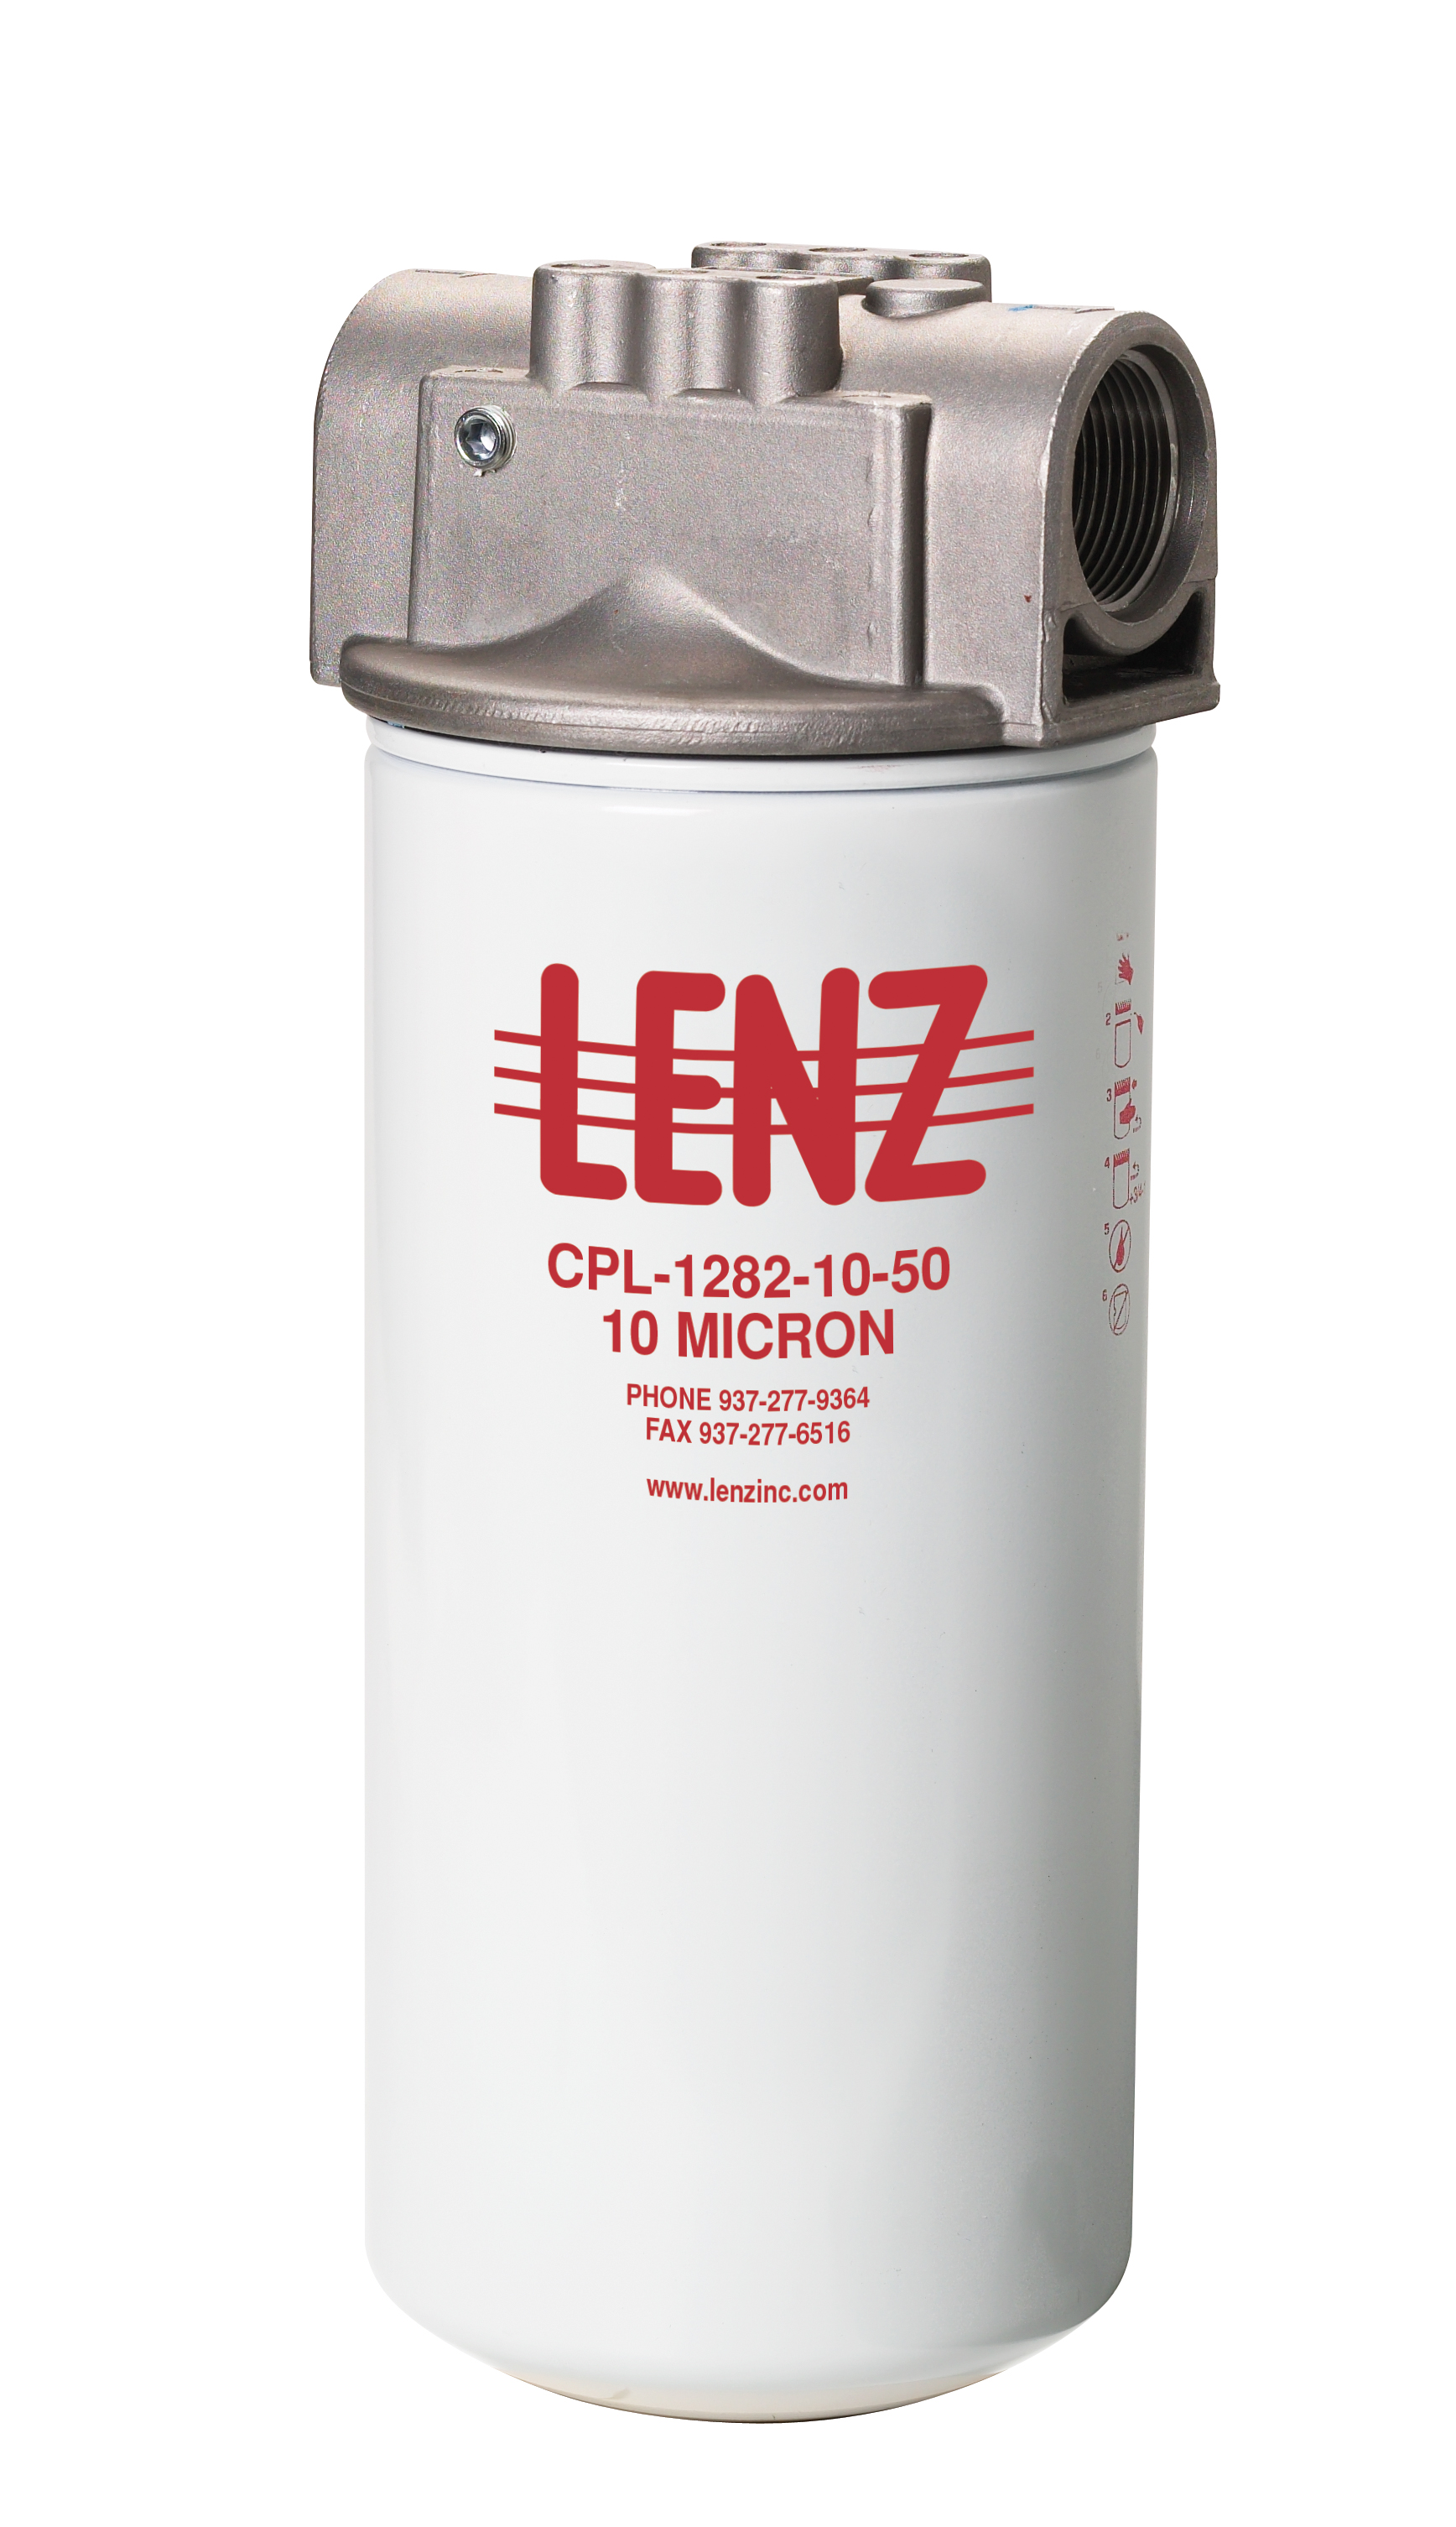 GENUINE LENZ CP-1282-25-50 25 MICRON OIL FILTER 